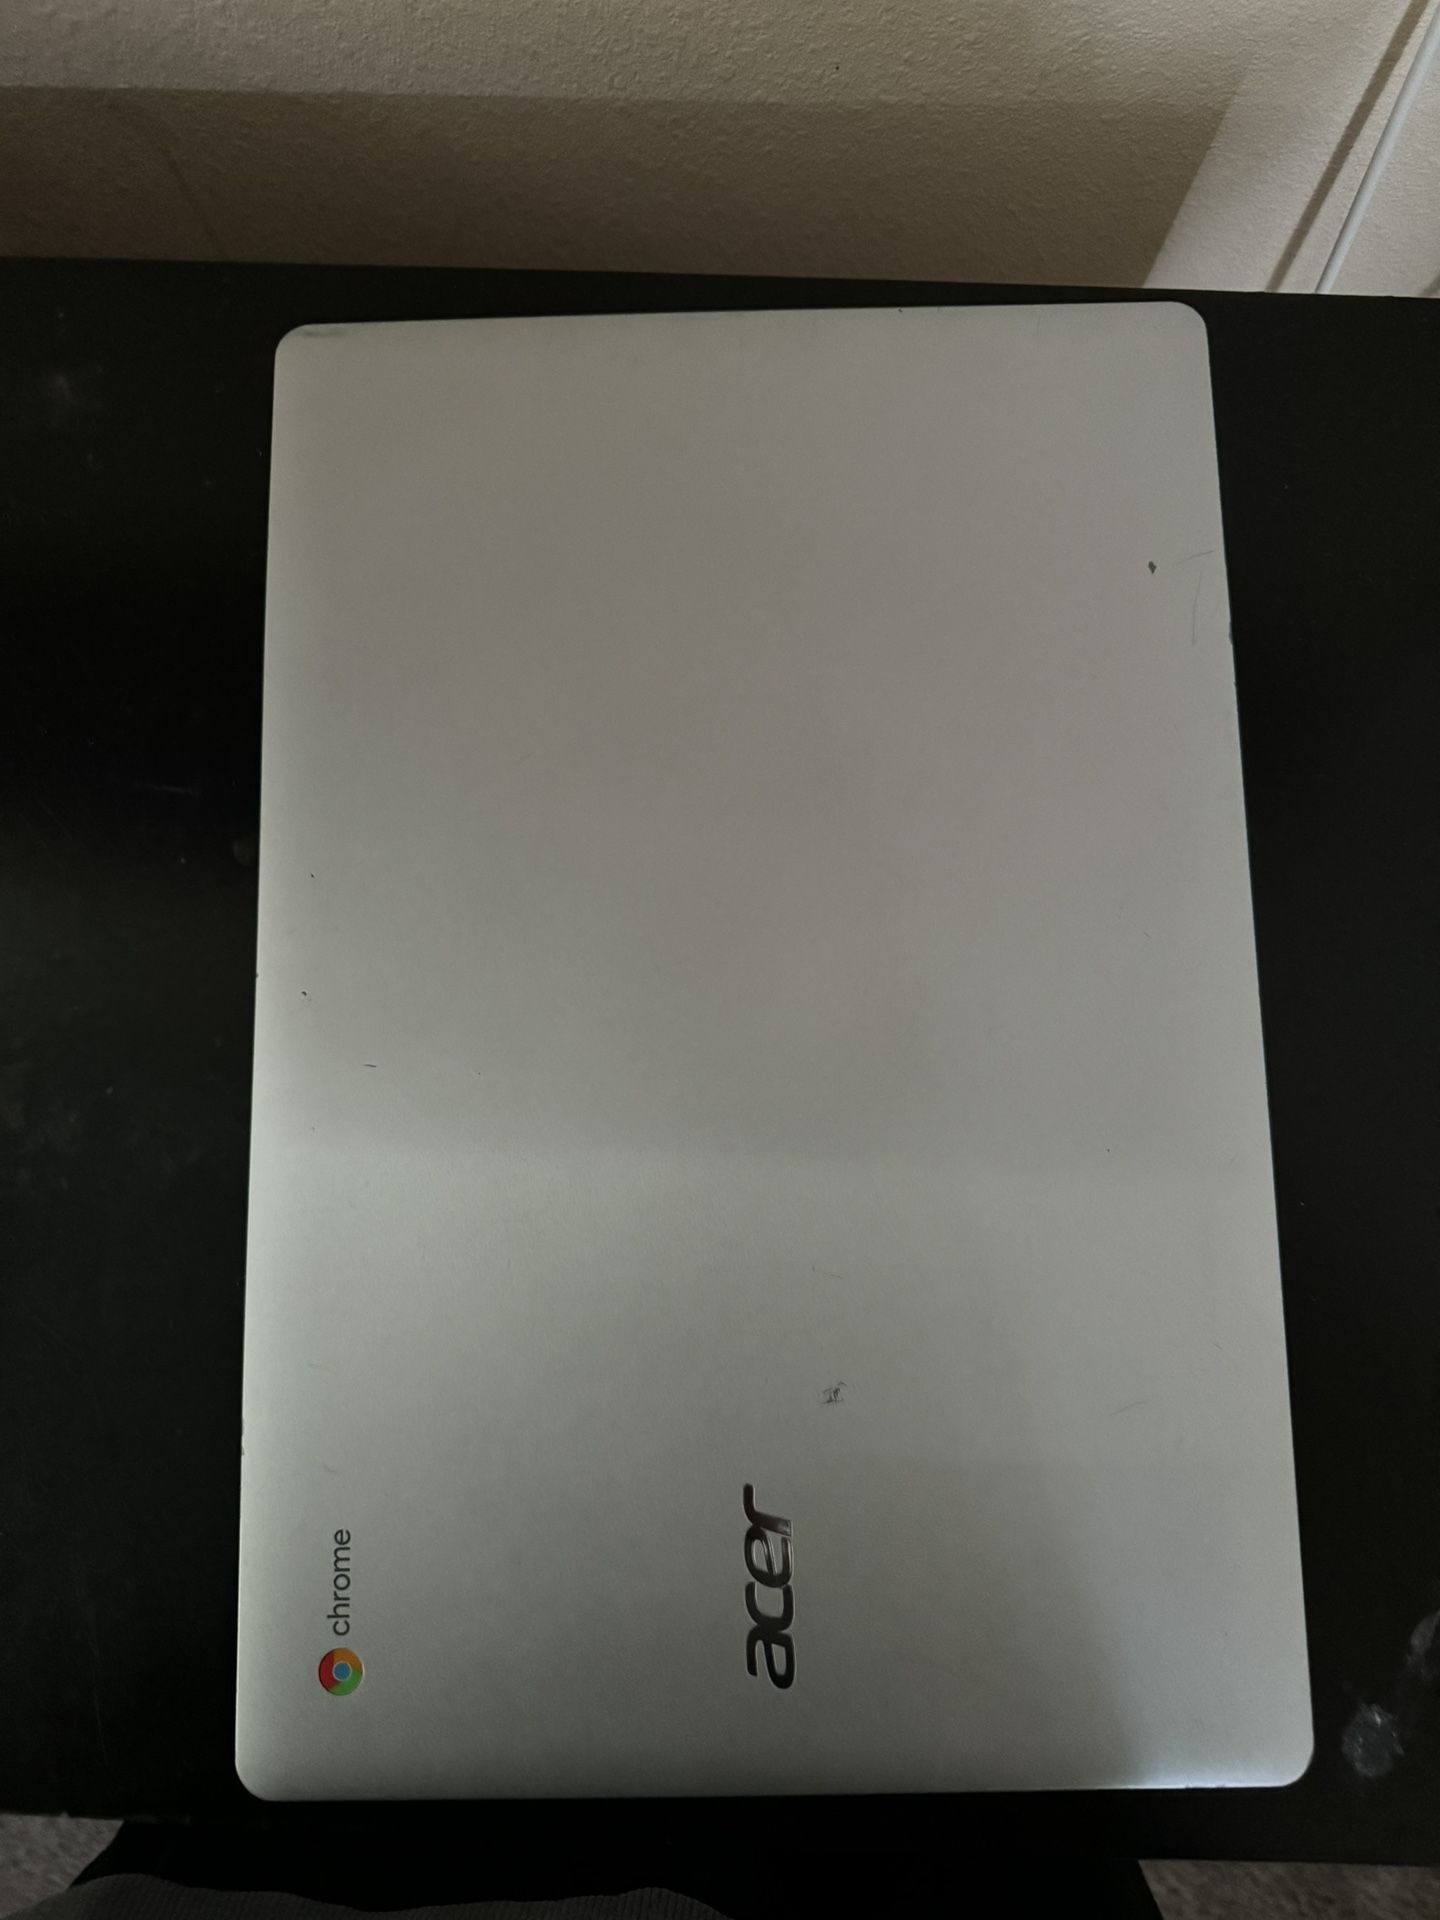 Slightly Beat Up Acer Chromebook Laptop